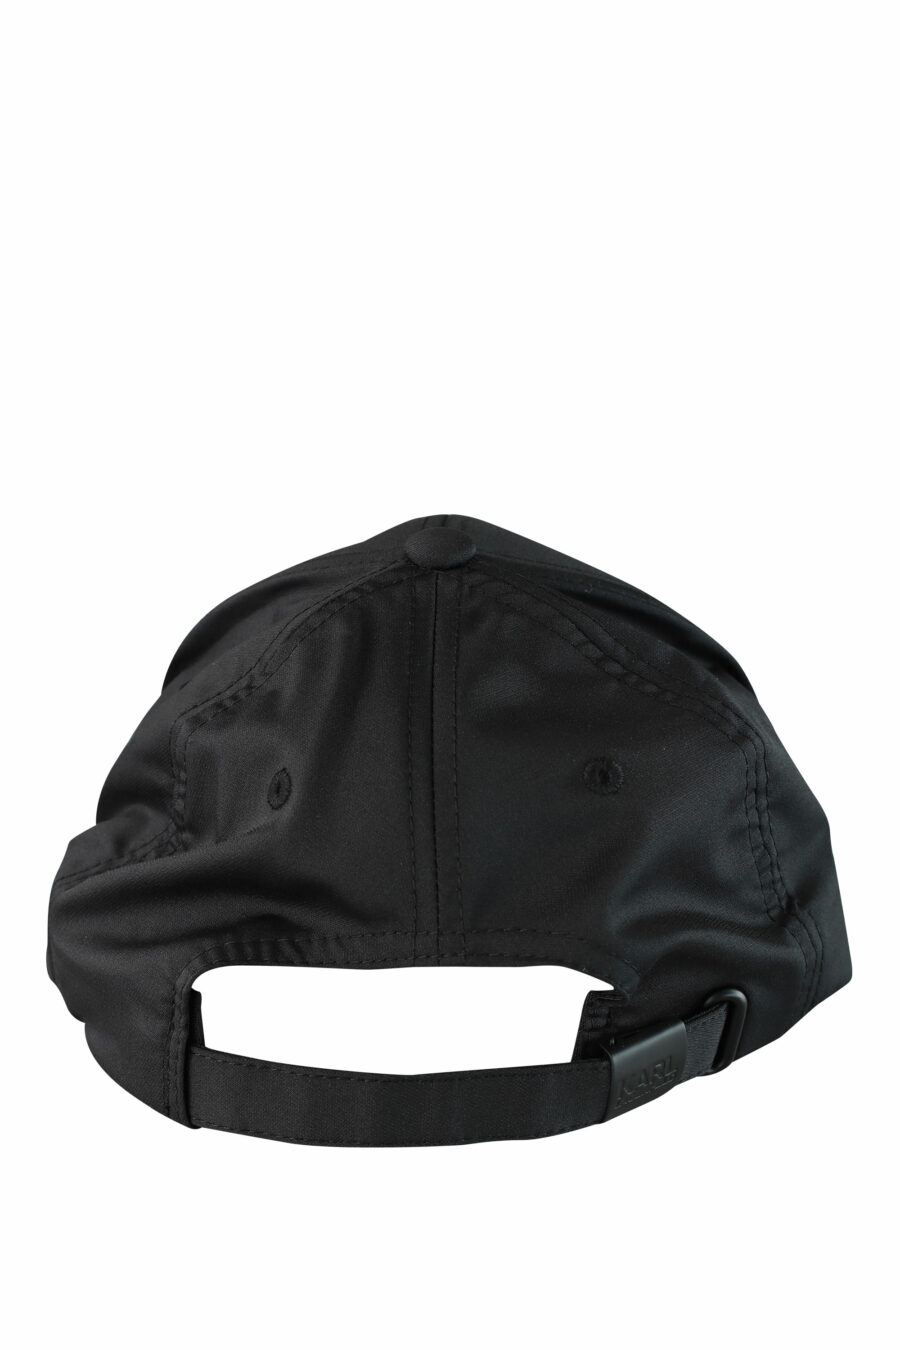 Black cap with logo label - IMG 1528